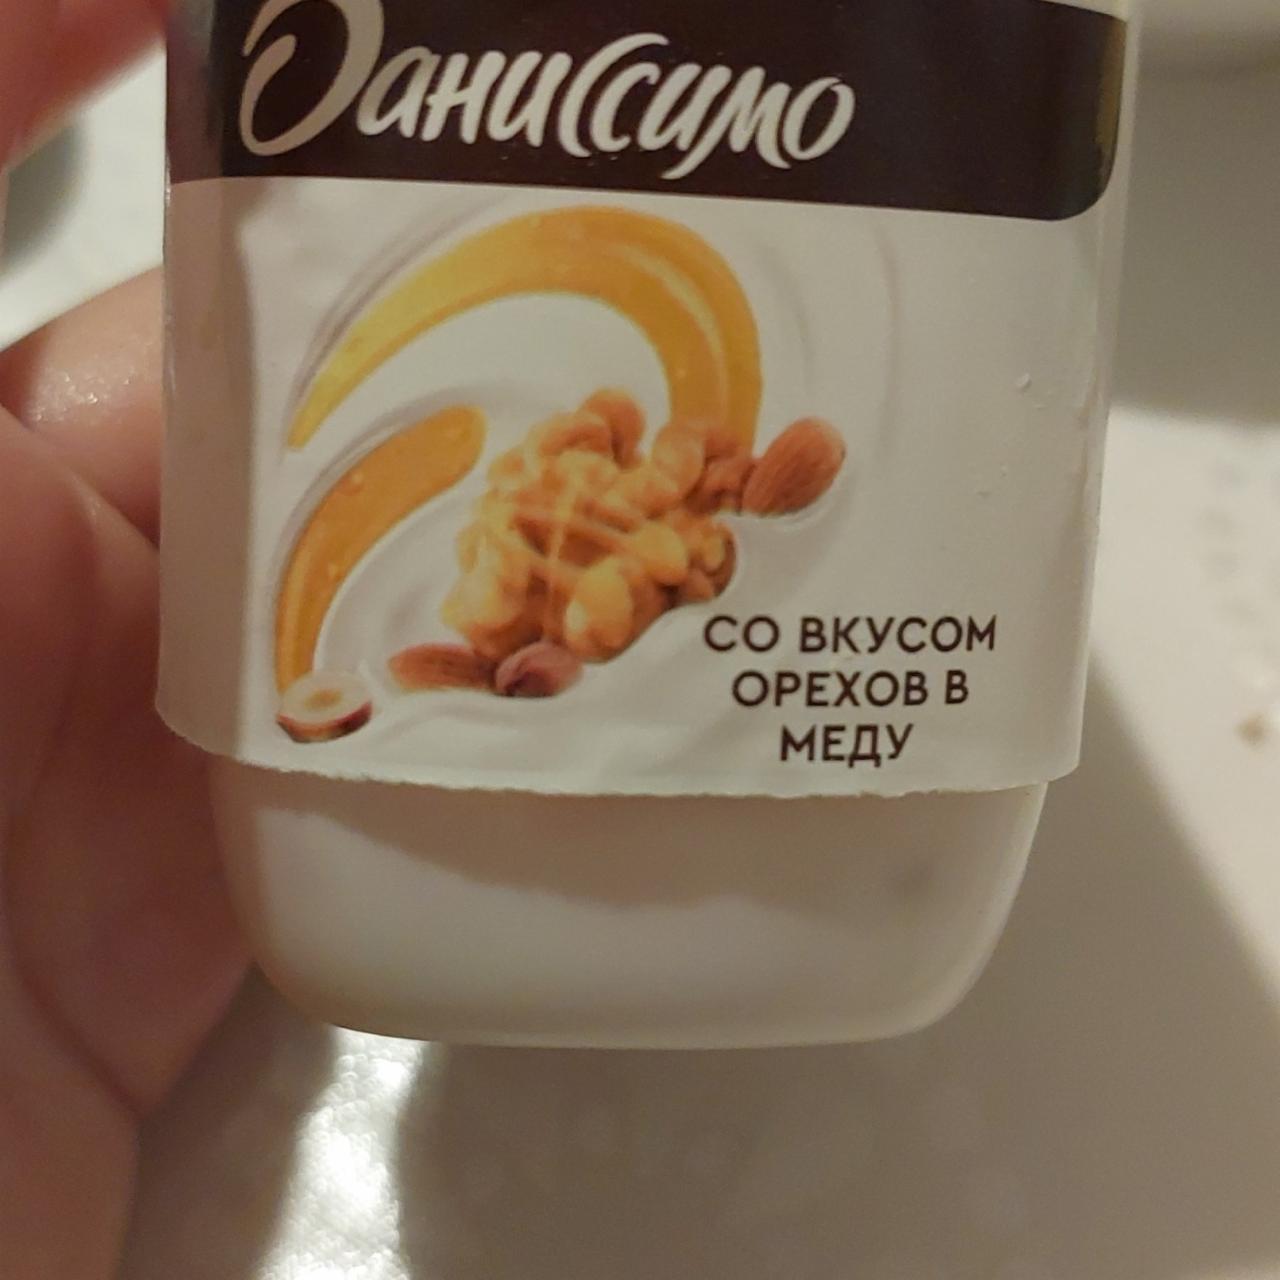 Фото - йогурт со вкусом орехов в меду даниссимо Danone